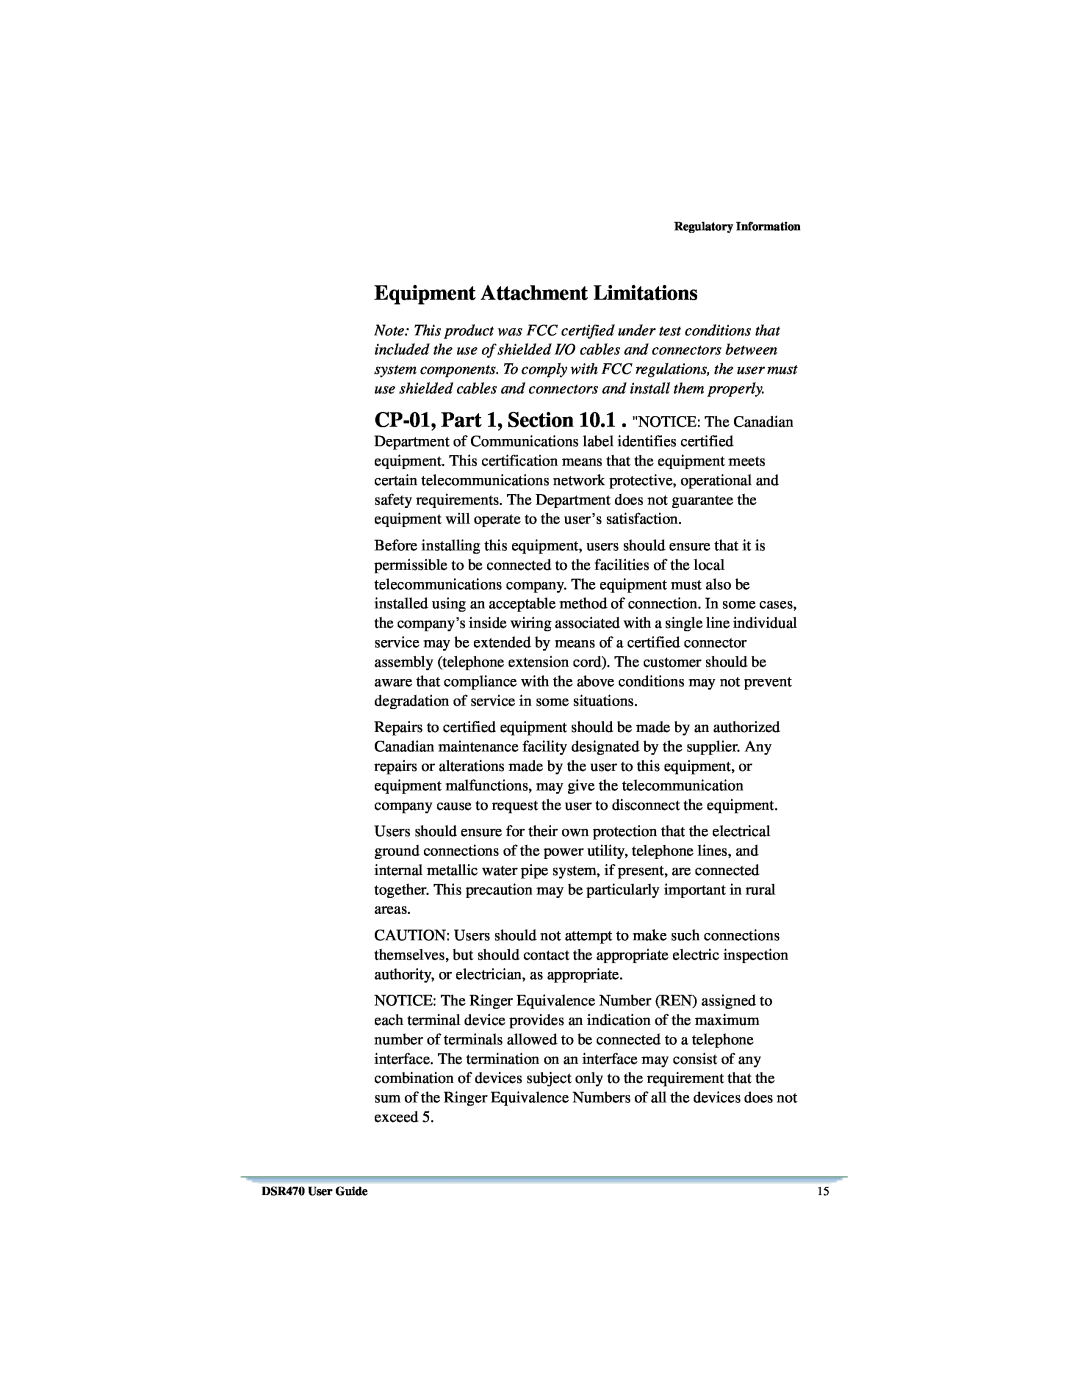 Univex DSR470 manual Equipment Attachment Limitations, CP-01,Part 1, .1 . NOTICE The Canadian, Regulatory Information 